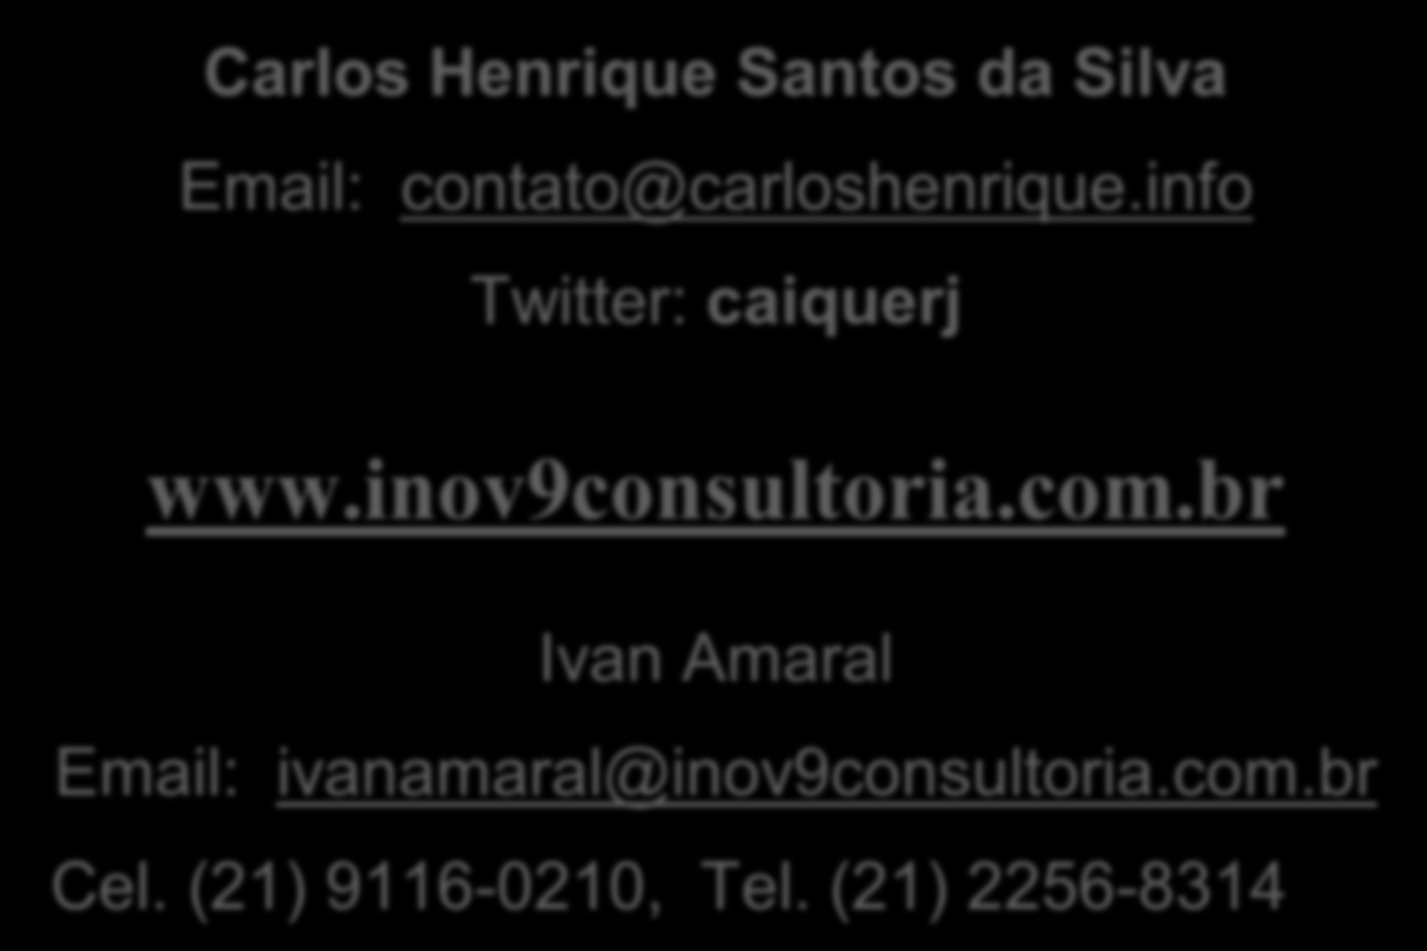 CONTATOS Carlos Henrique Santos da Silva Email: contato@carloshenrique.info Twitter: caiquerj www.